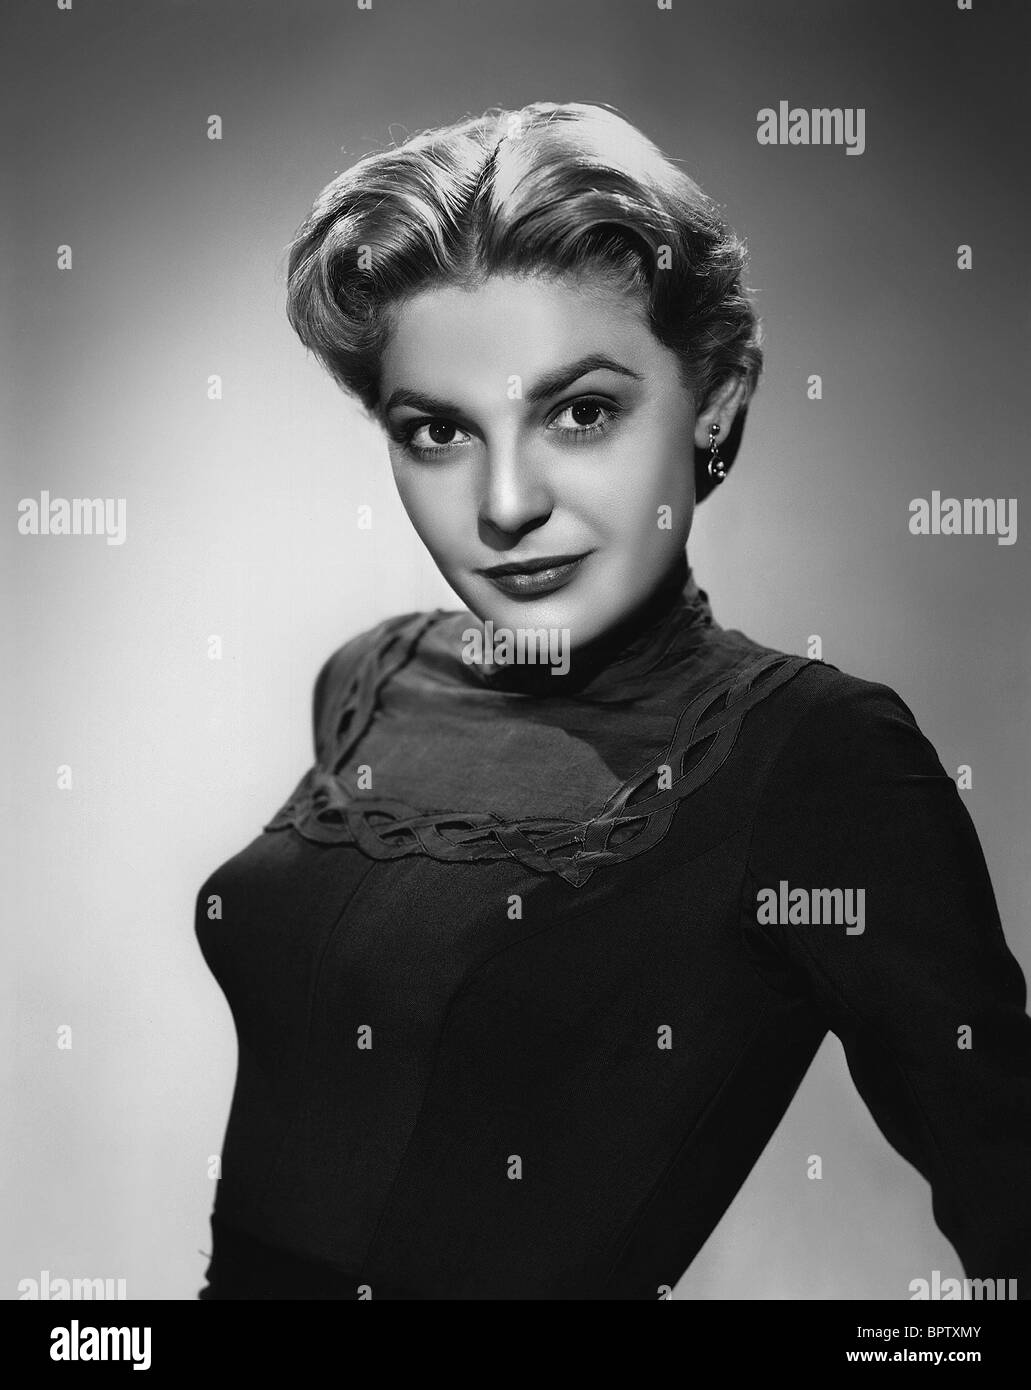 ANNE BANCROFT ACTRESS (1955 Stock Photo - Alamy.